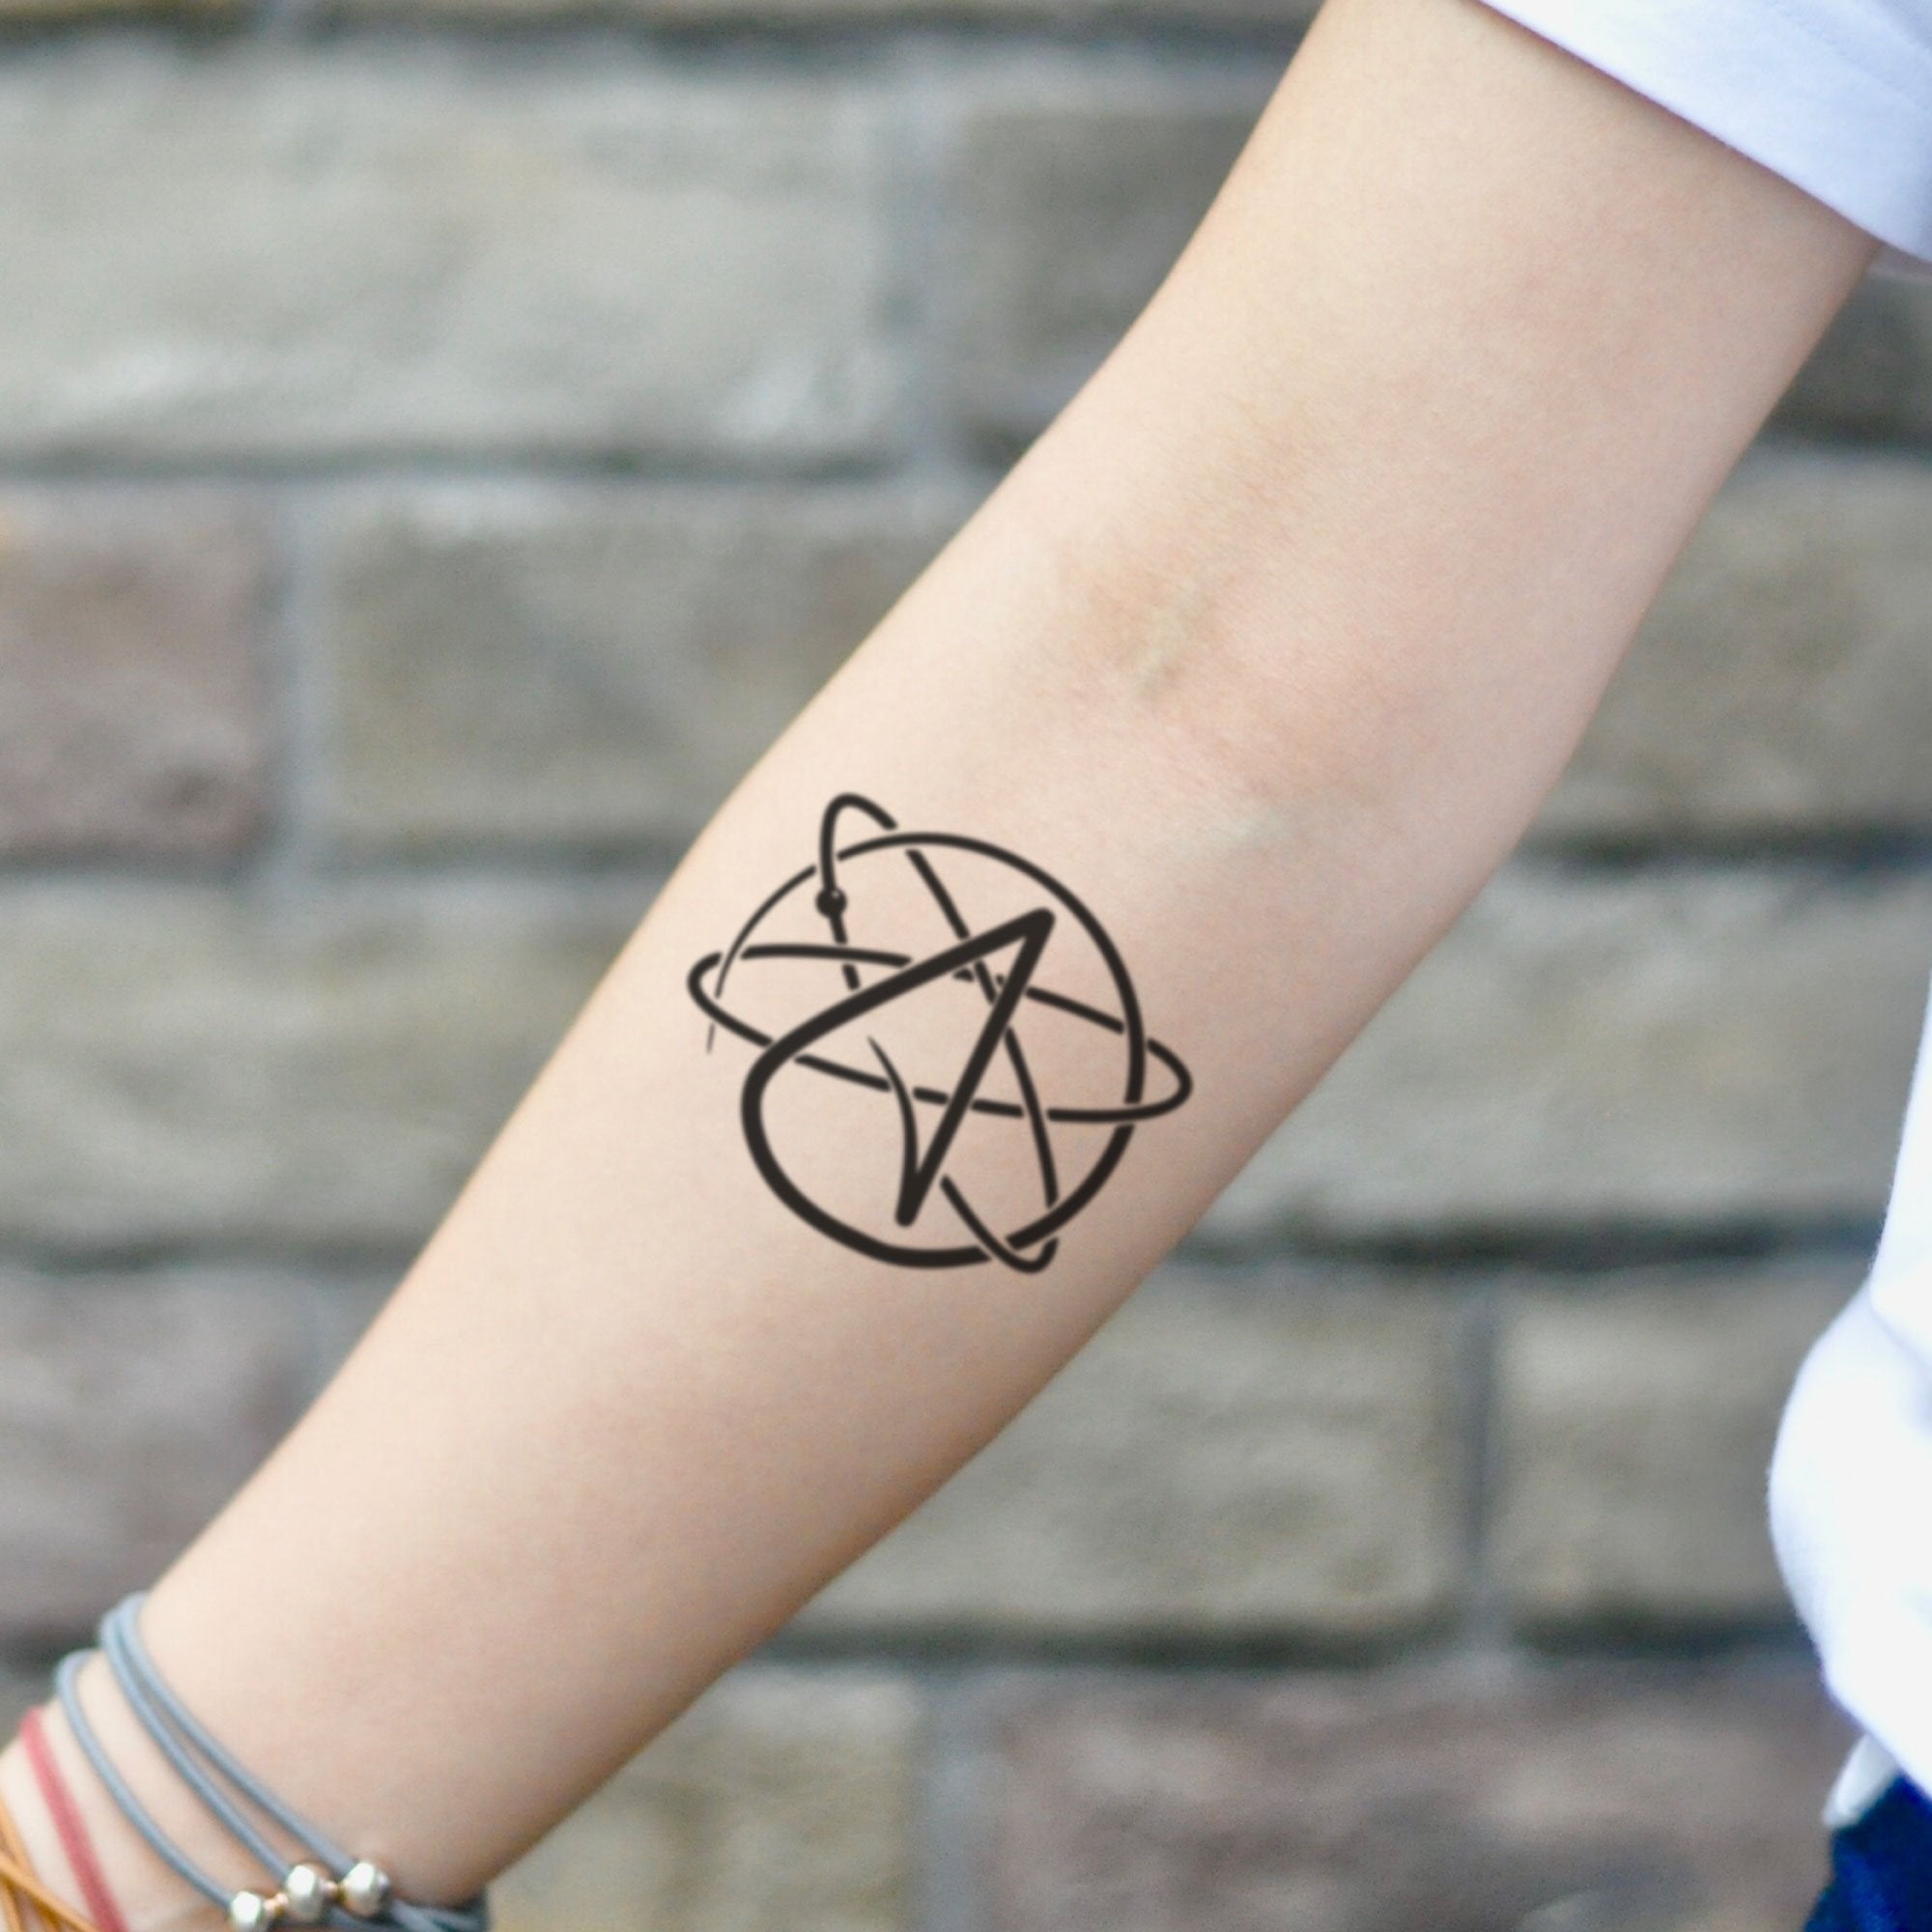 Atheist tattoo by RawGraff on DeviantArt